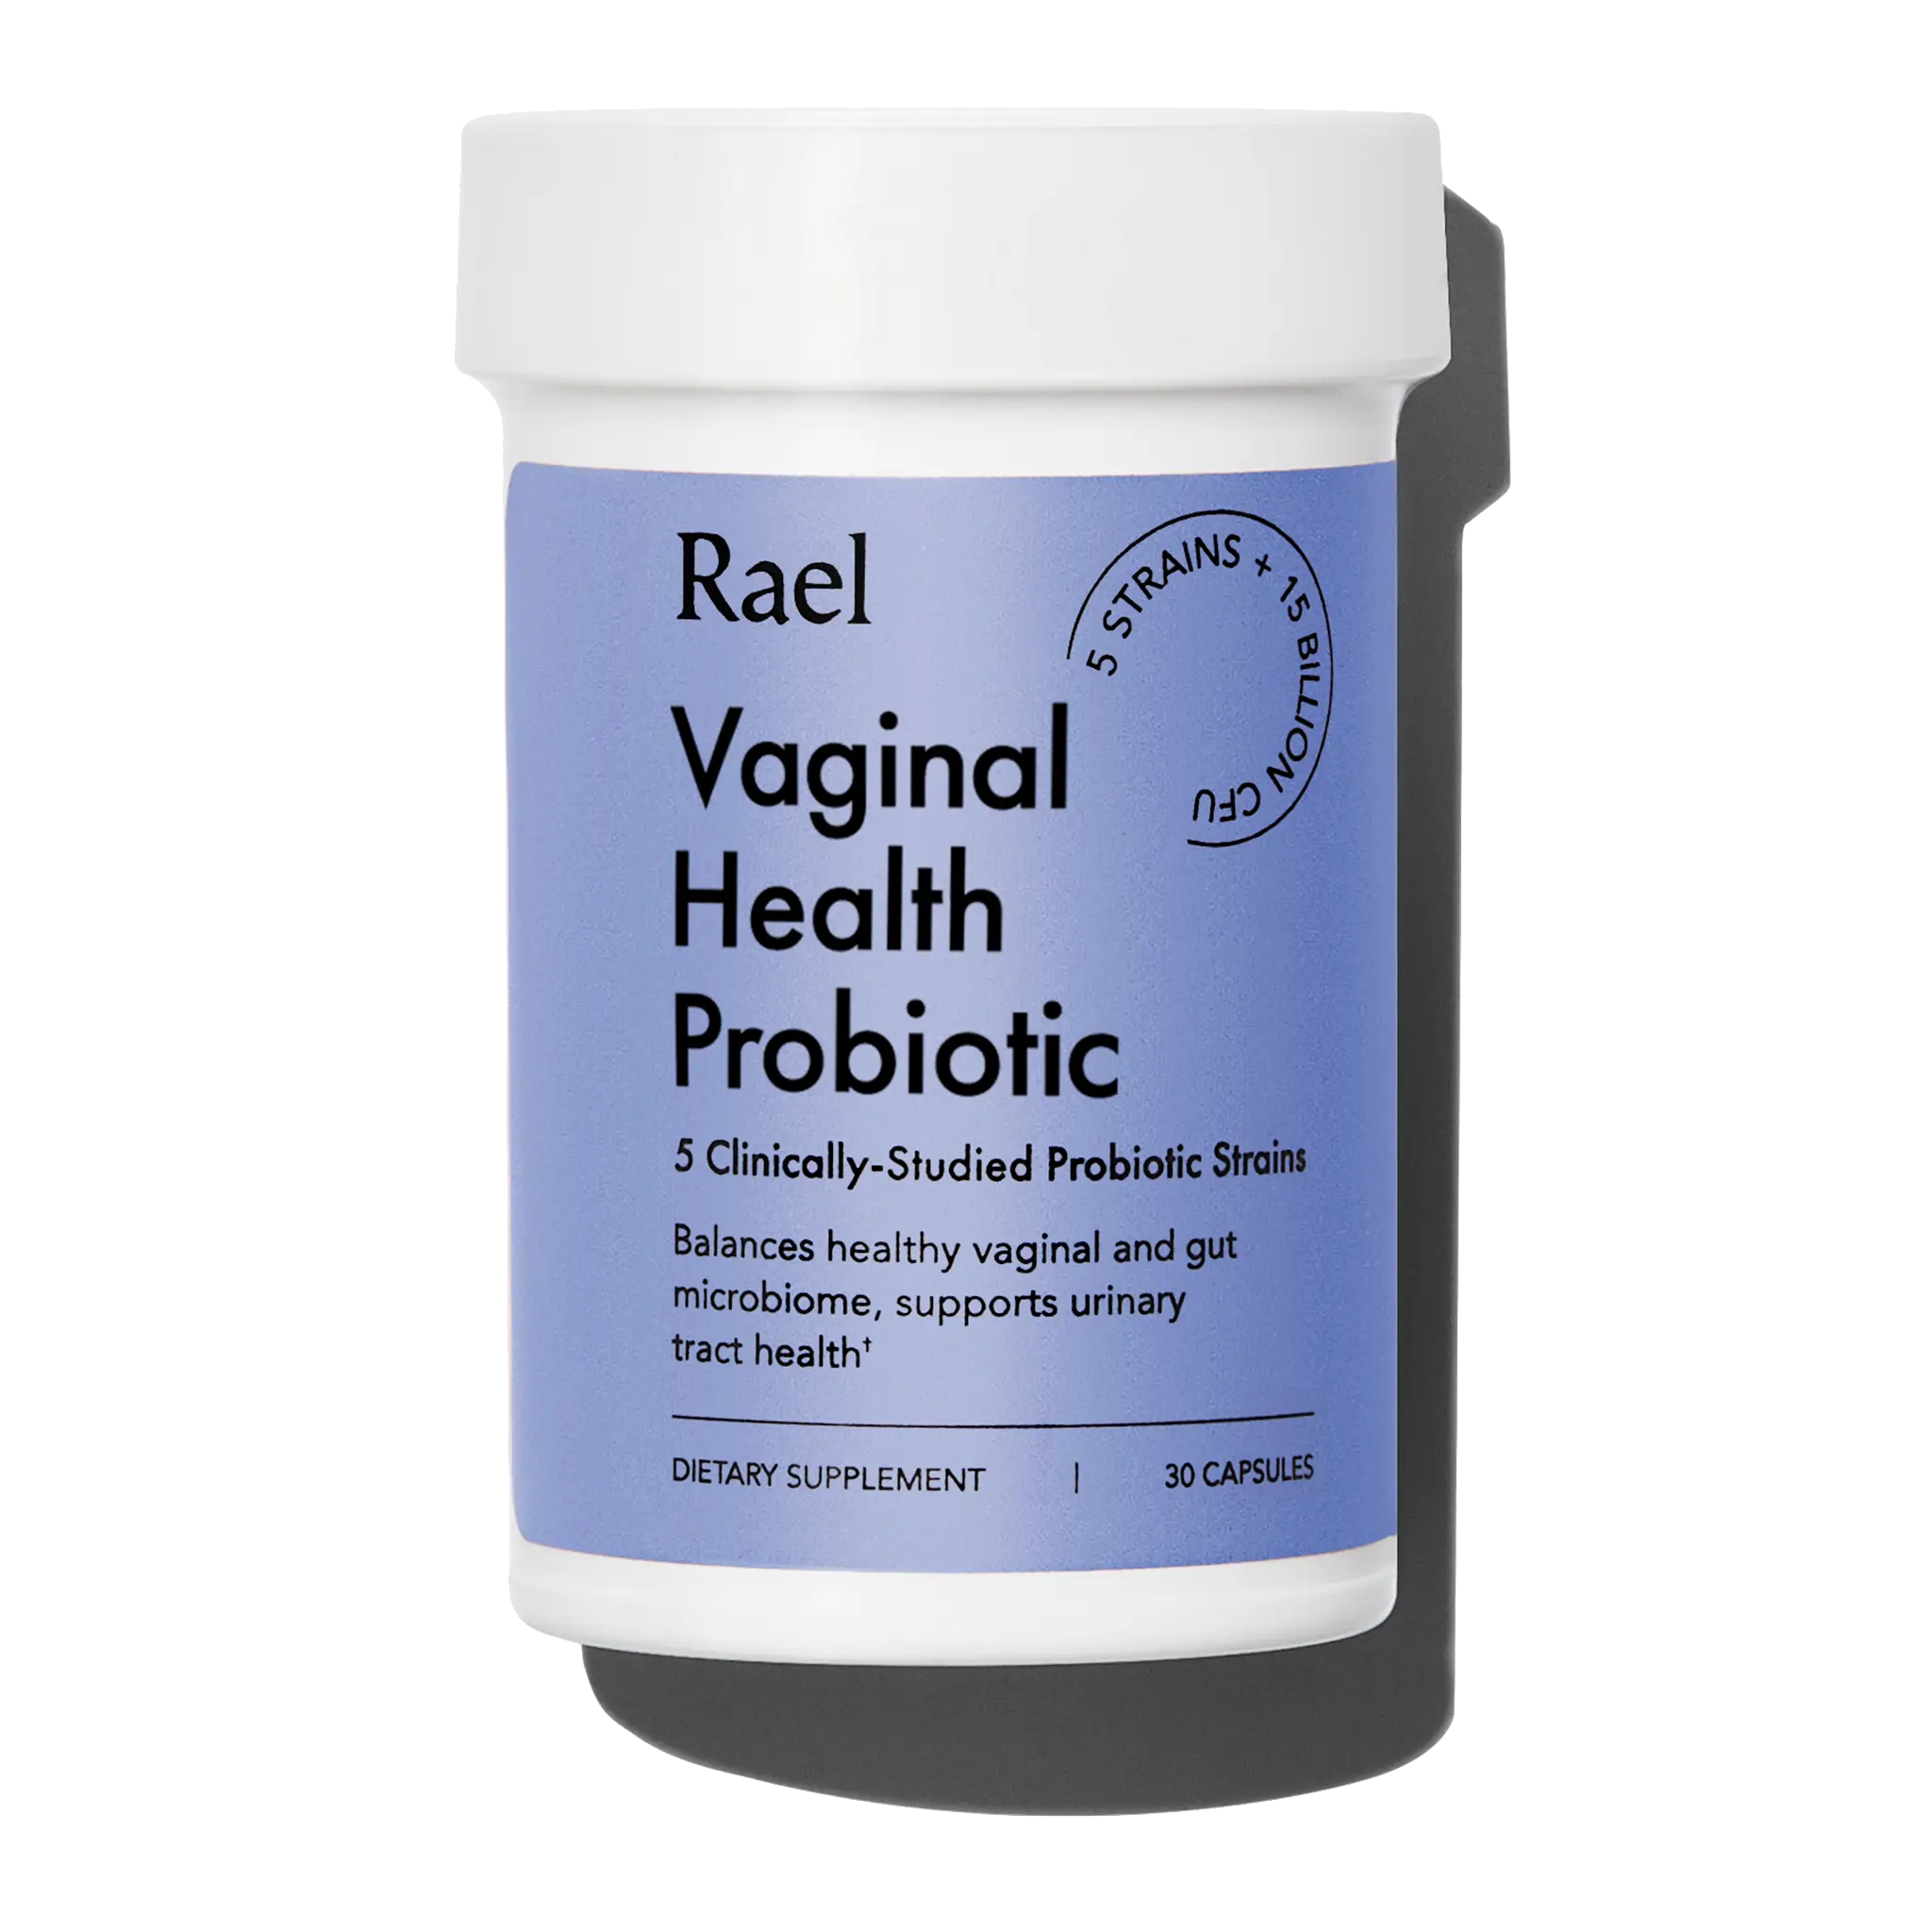 Vaginal Health Probiotics Supplement Container